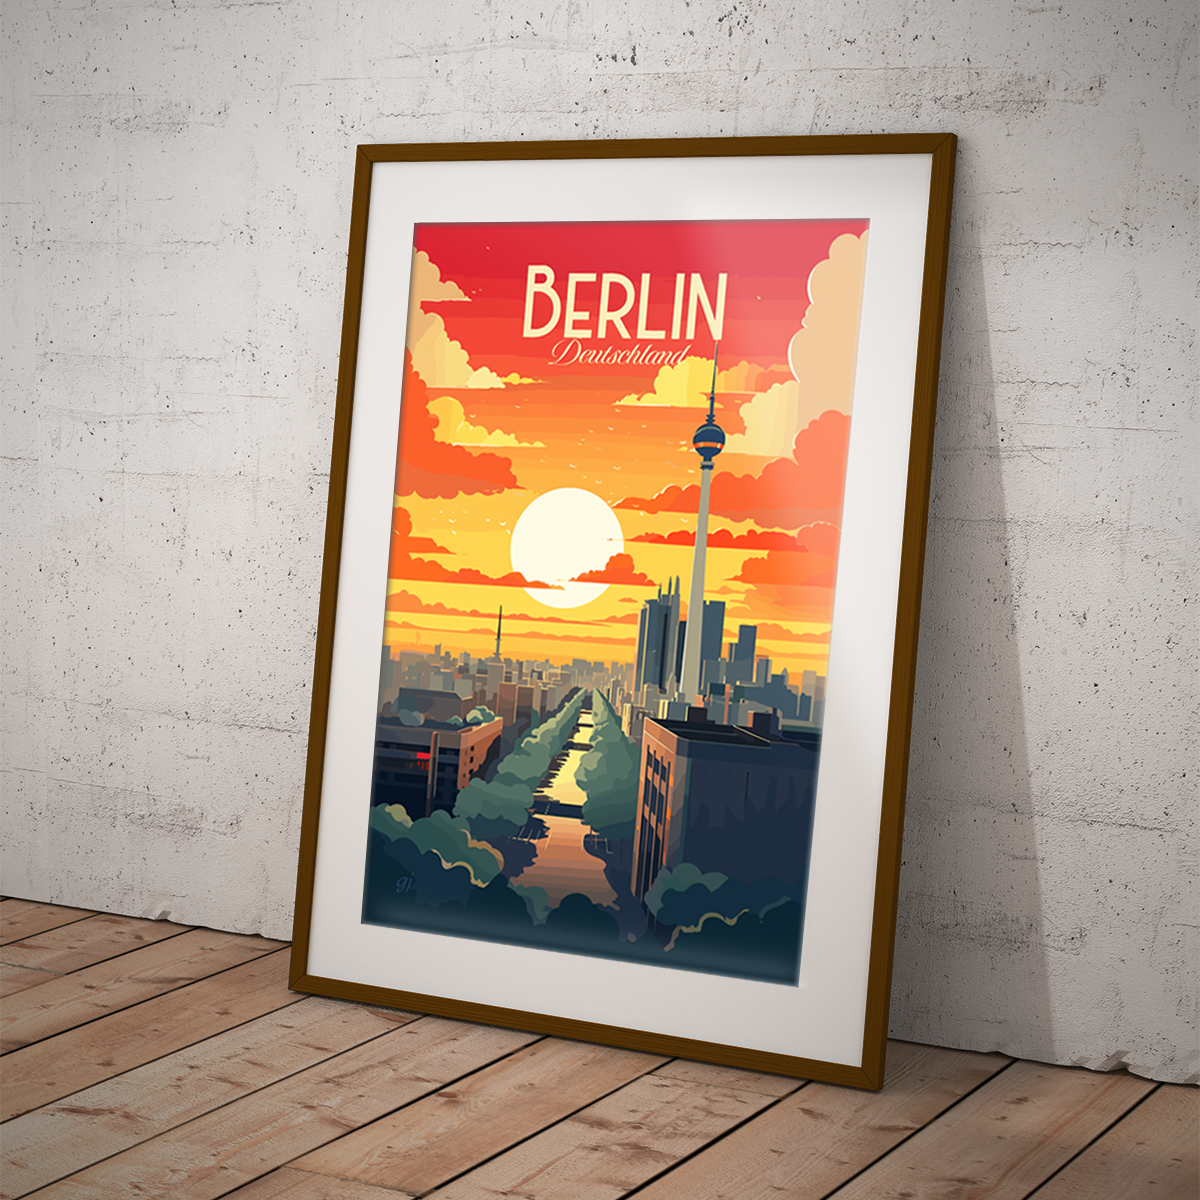 Berlin poster by bon voyage design